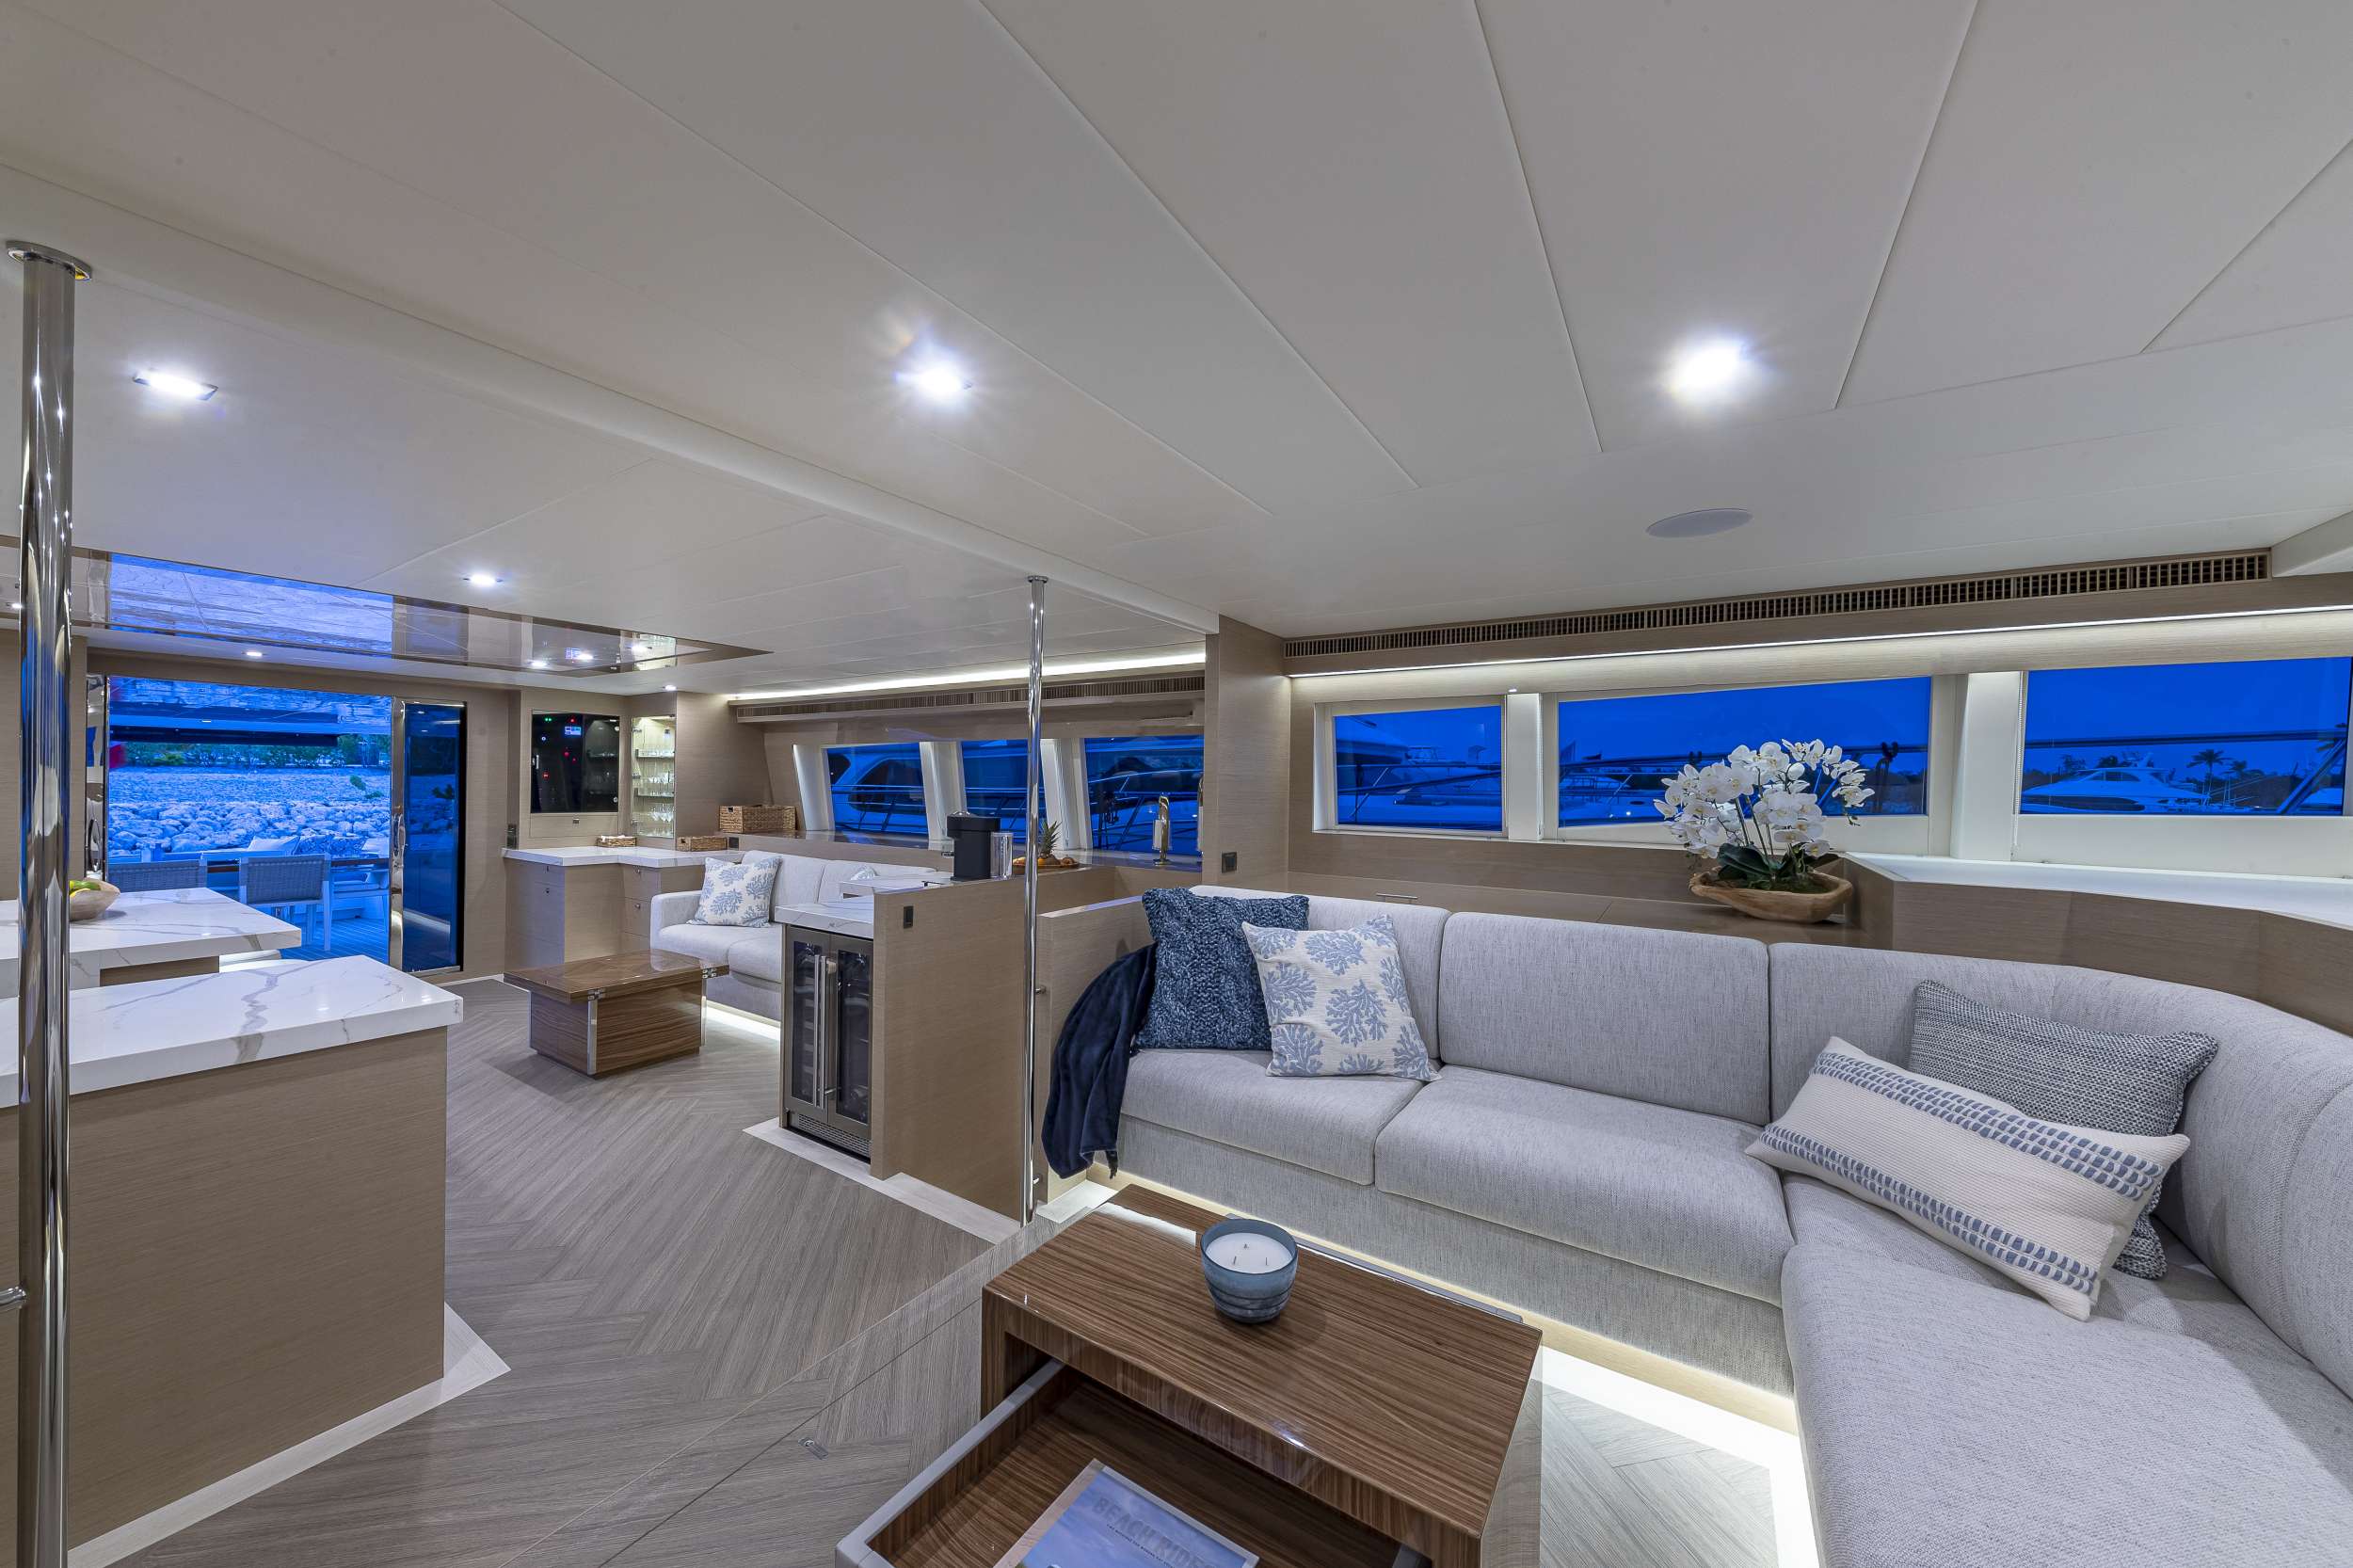 OMAKASE - Luxury yacht charter British Virgin Islands & Boat hire in Bahamas & Caribbean 5